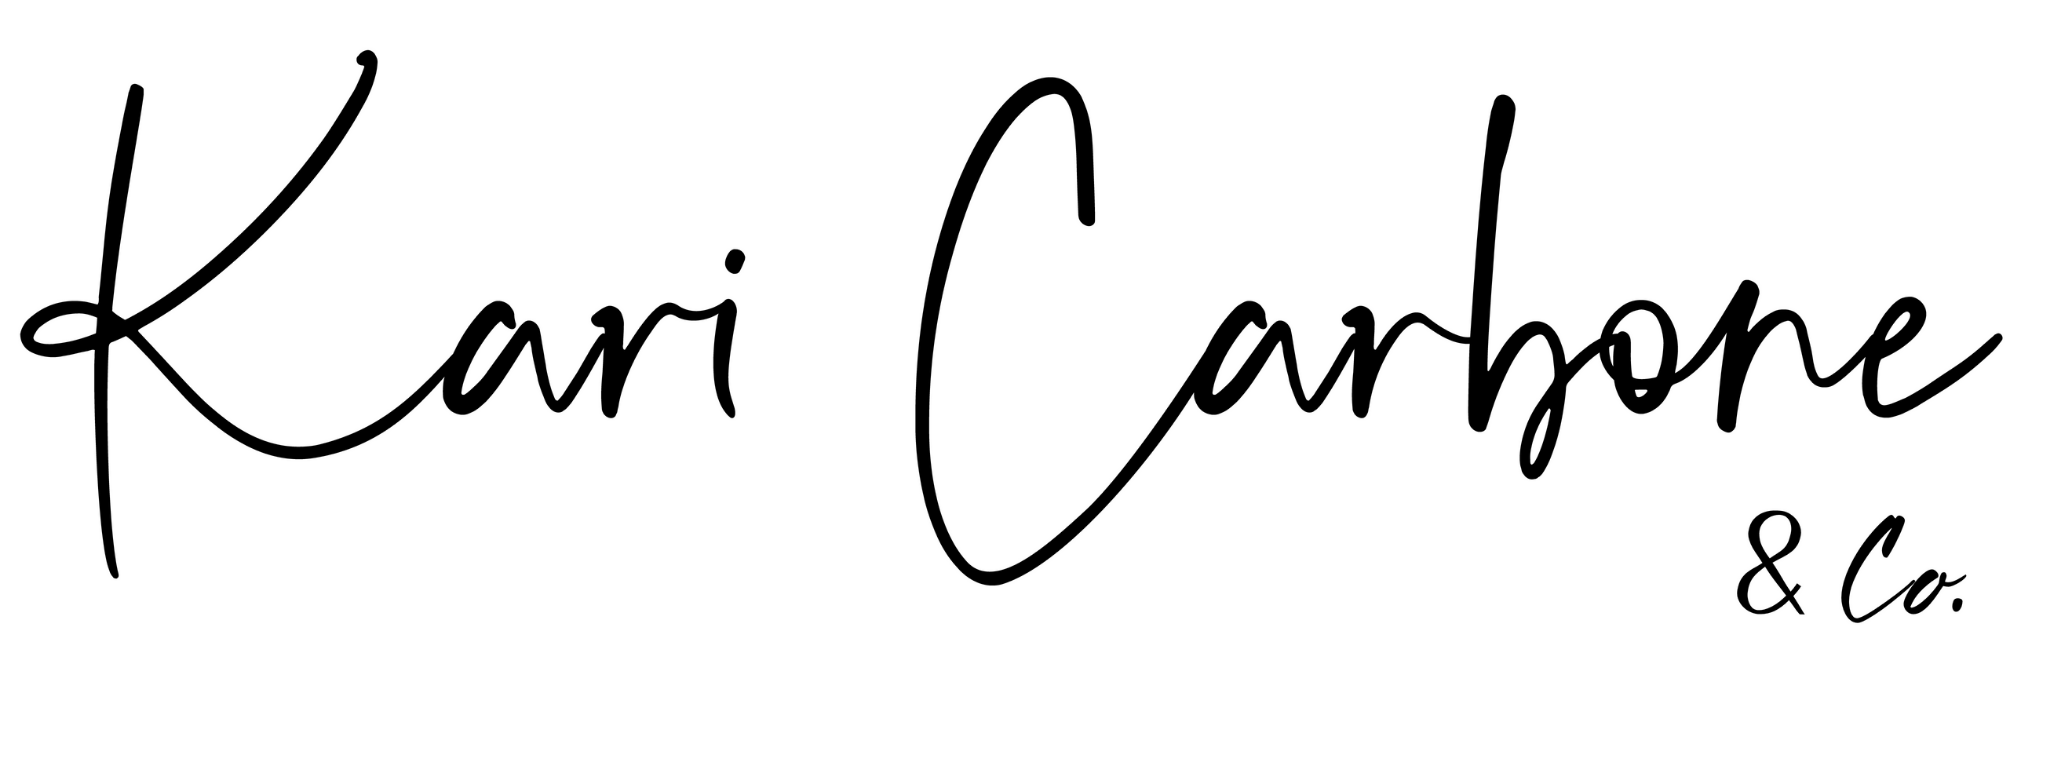 Kari Carbone & Company